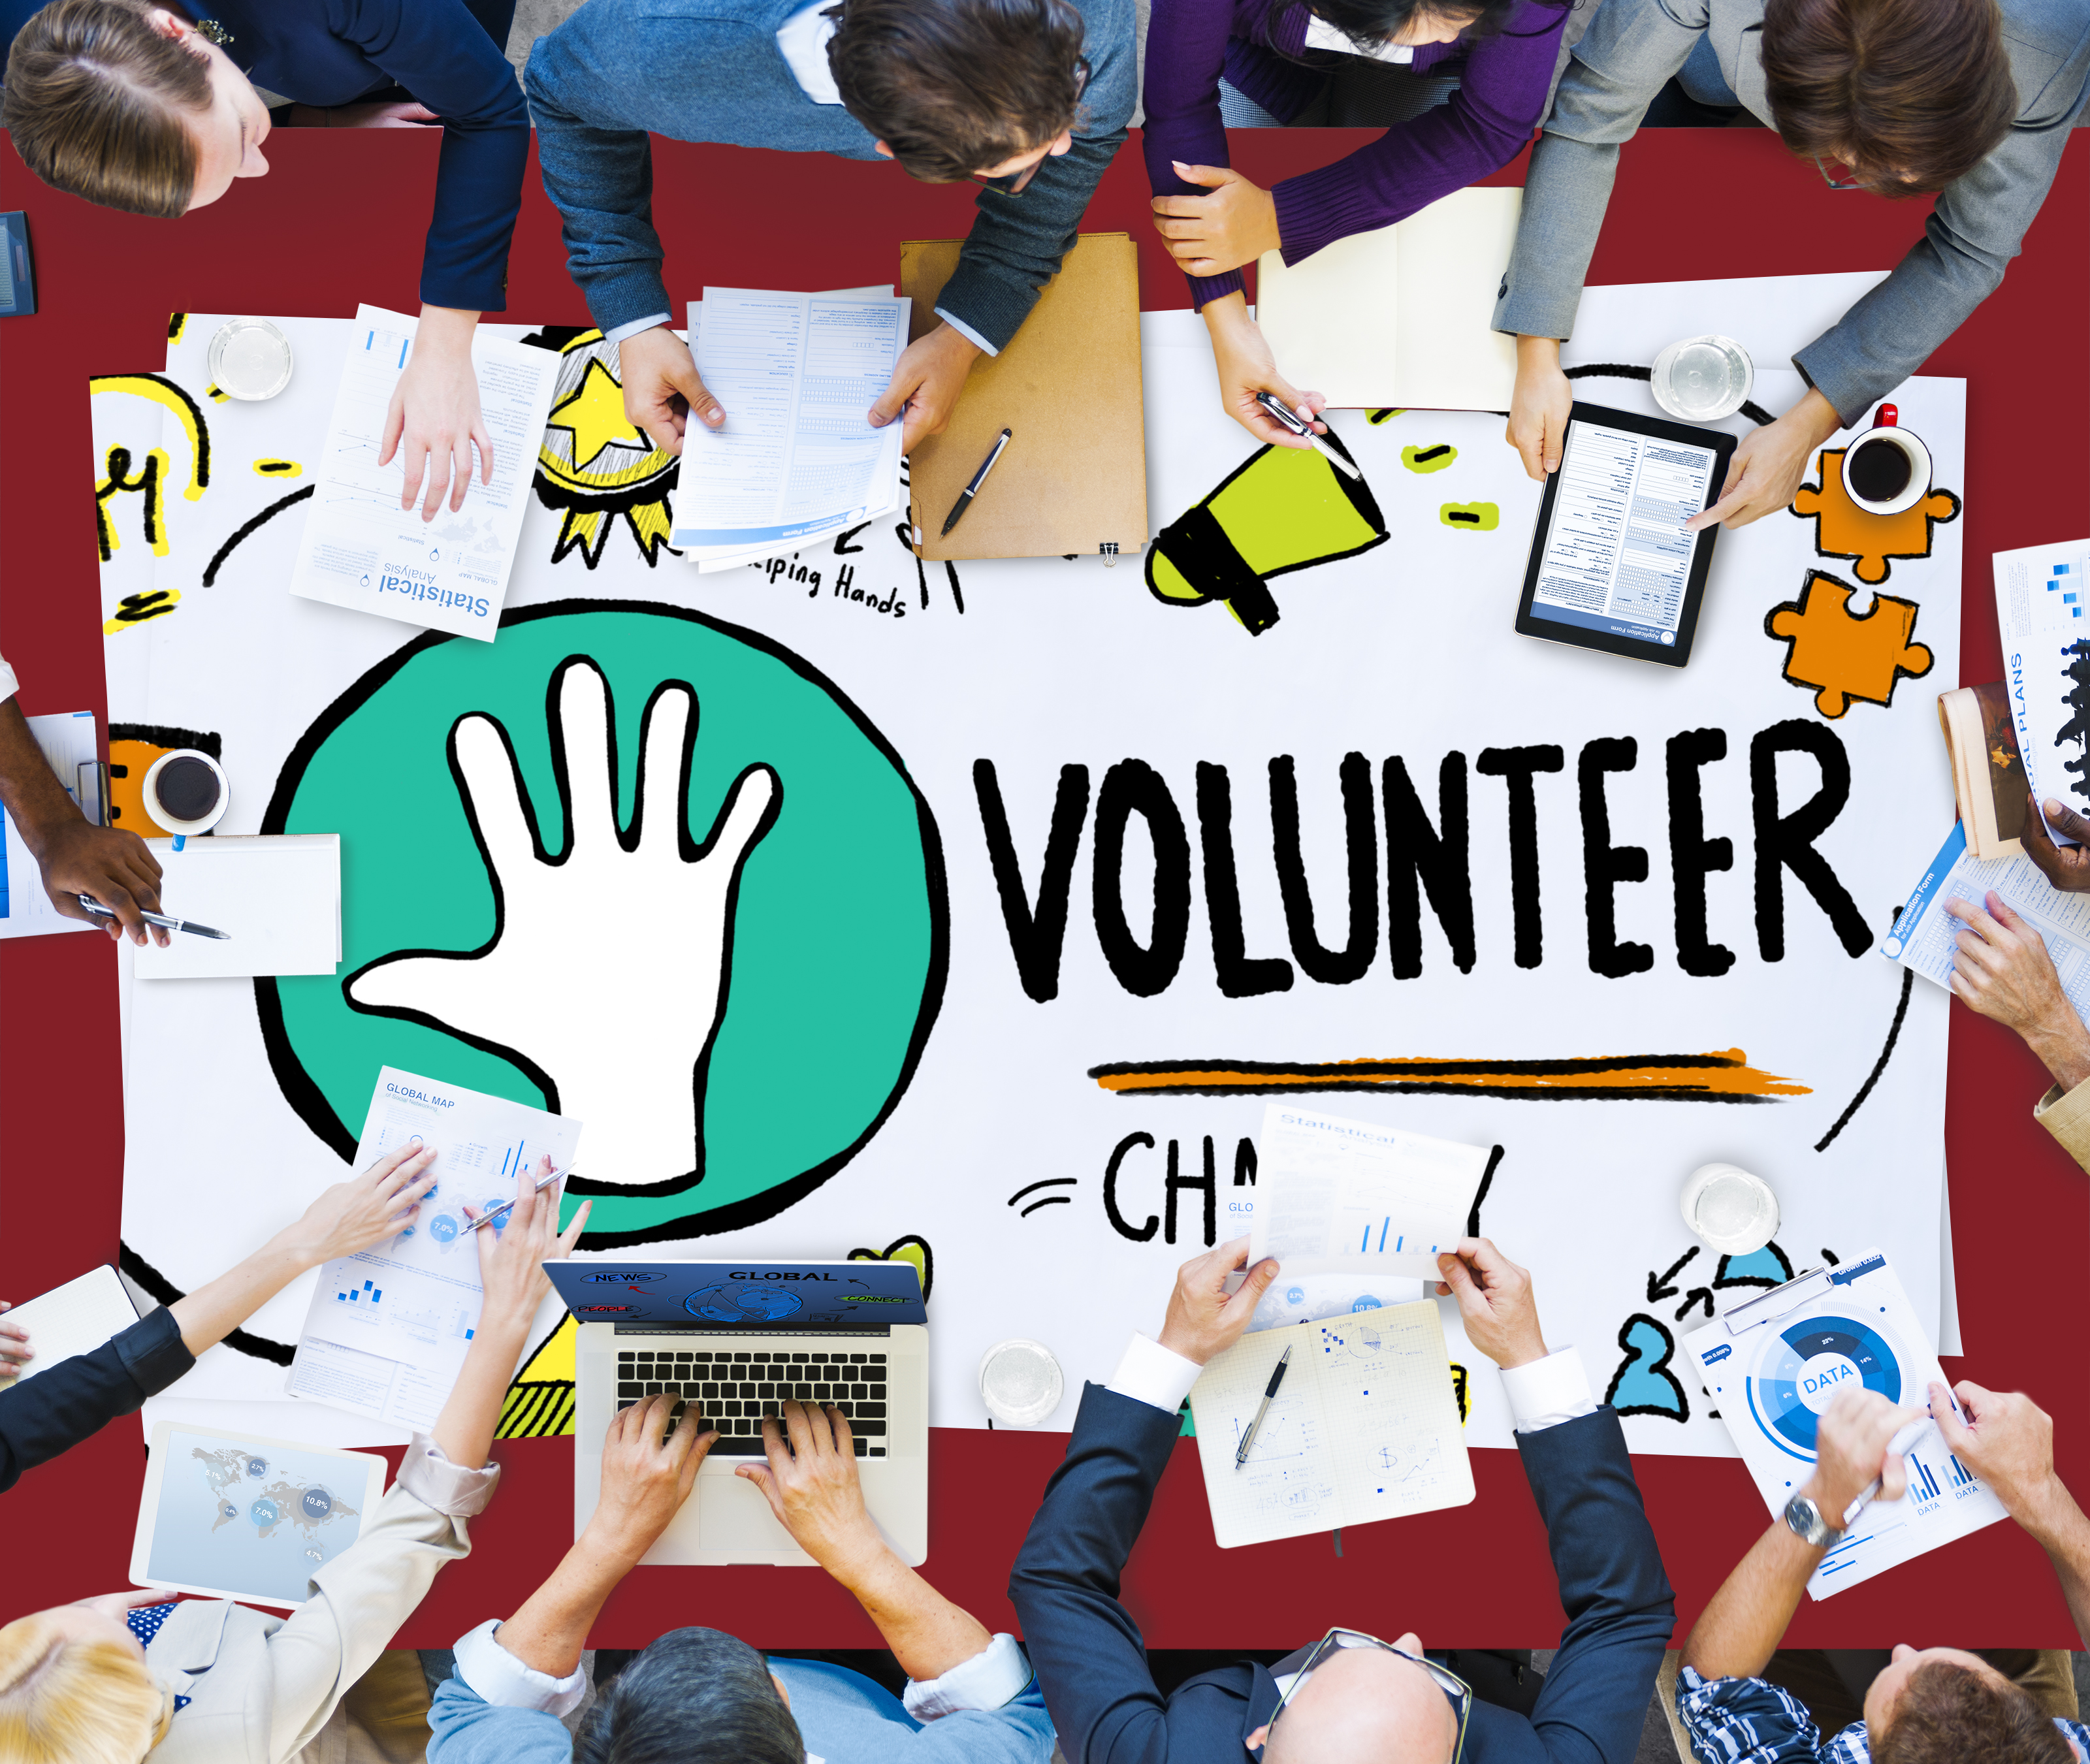 Making it easy for people to volunteer: planning is key